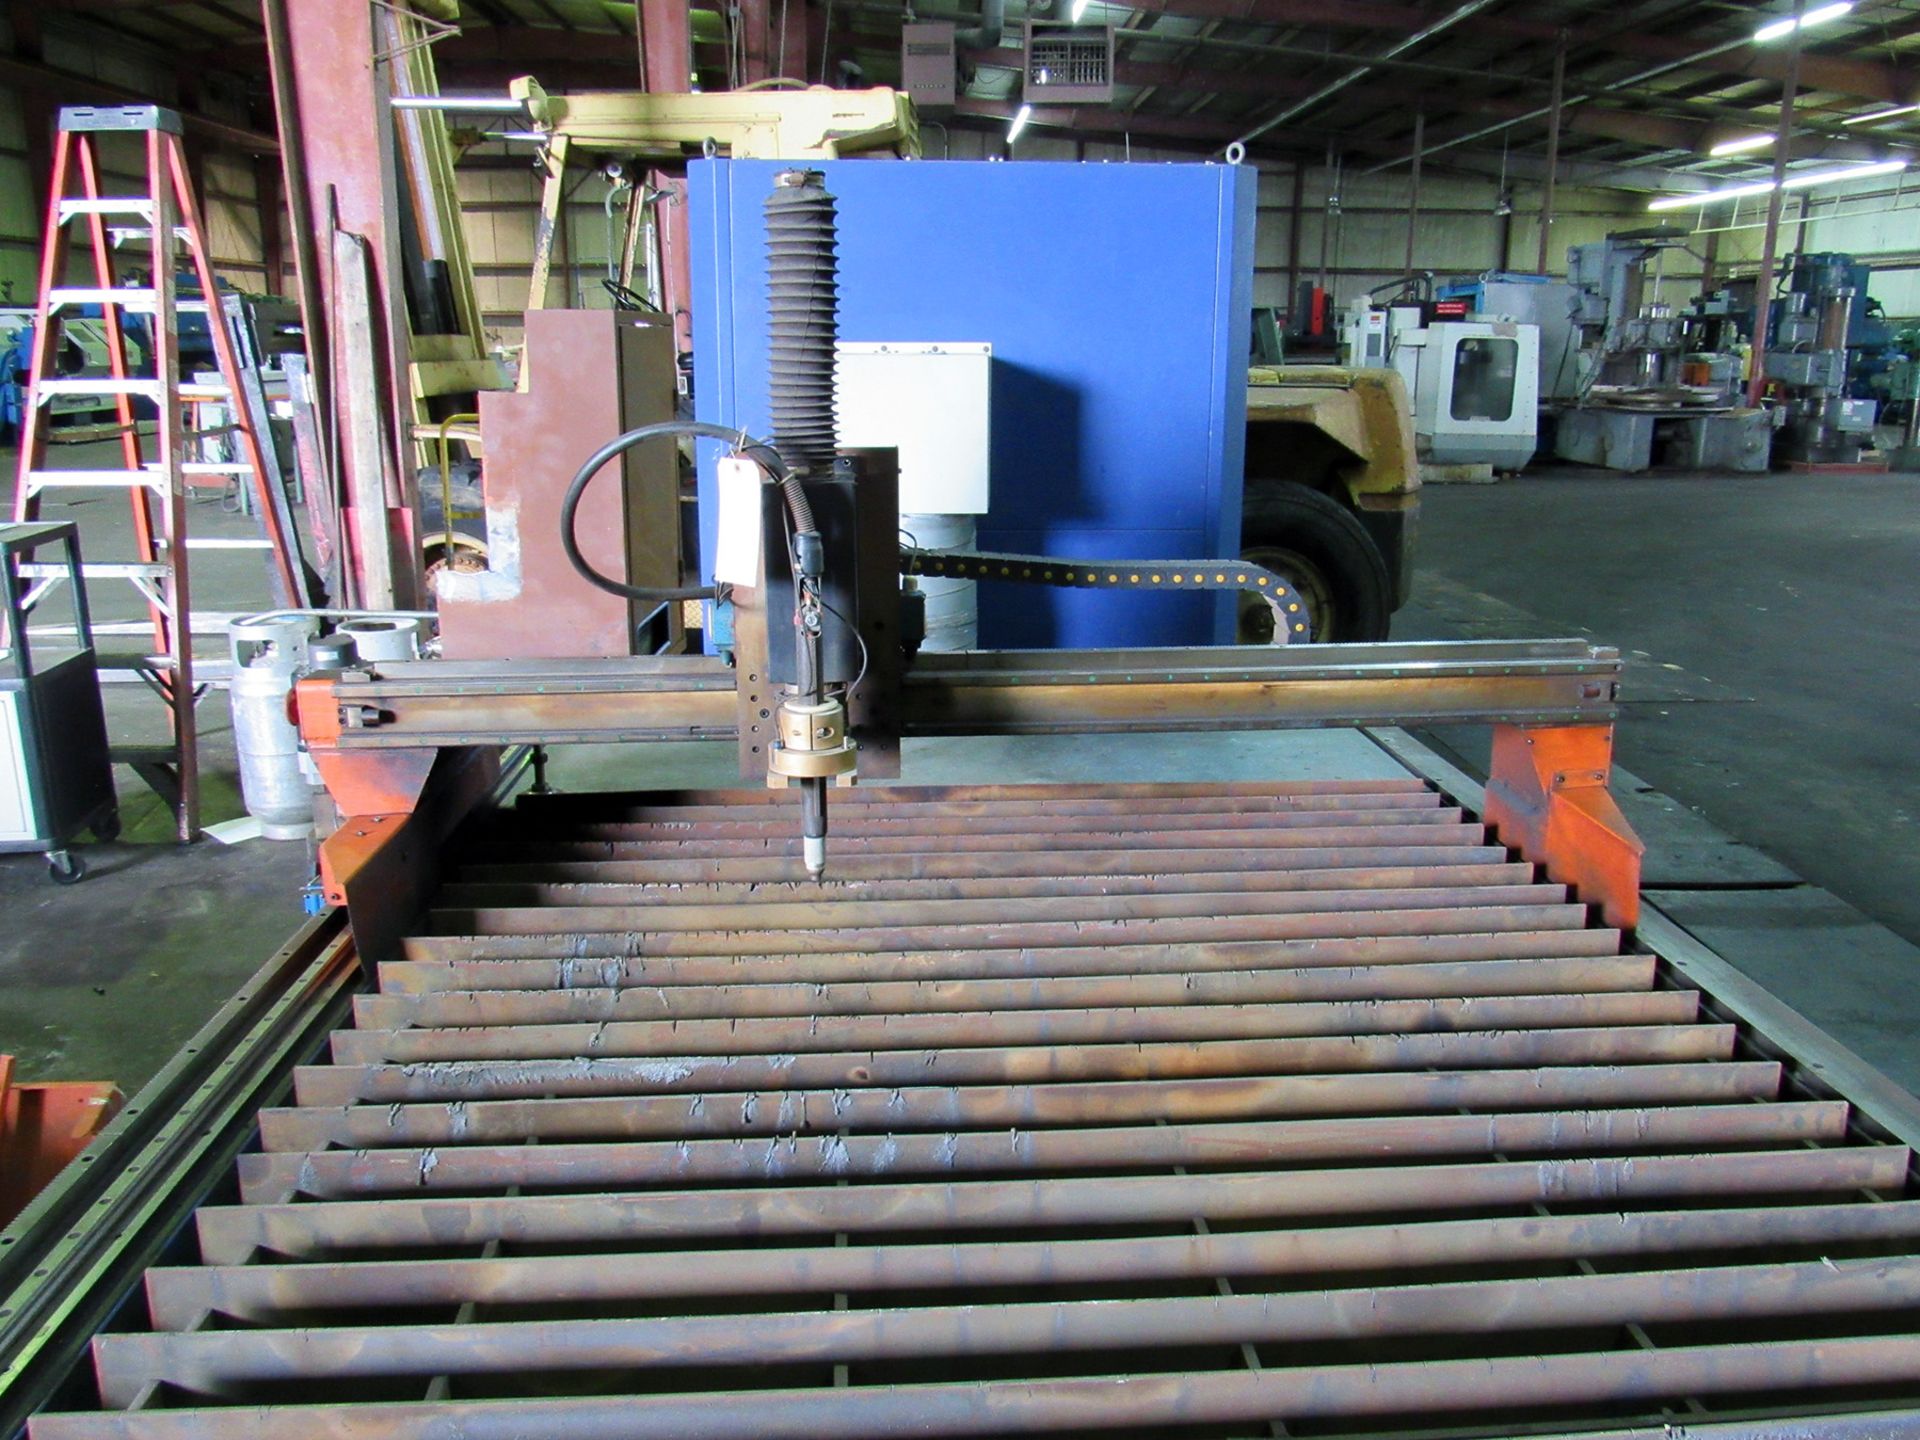 CNC PLASMA CUTTING MACHINE, VANGUARD MDL. PM510, 5' x 10 cutting cap., single plasma torch, - Image 4 of 8